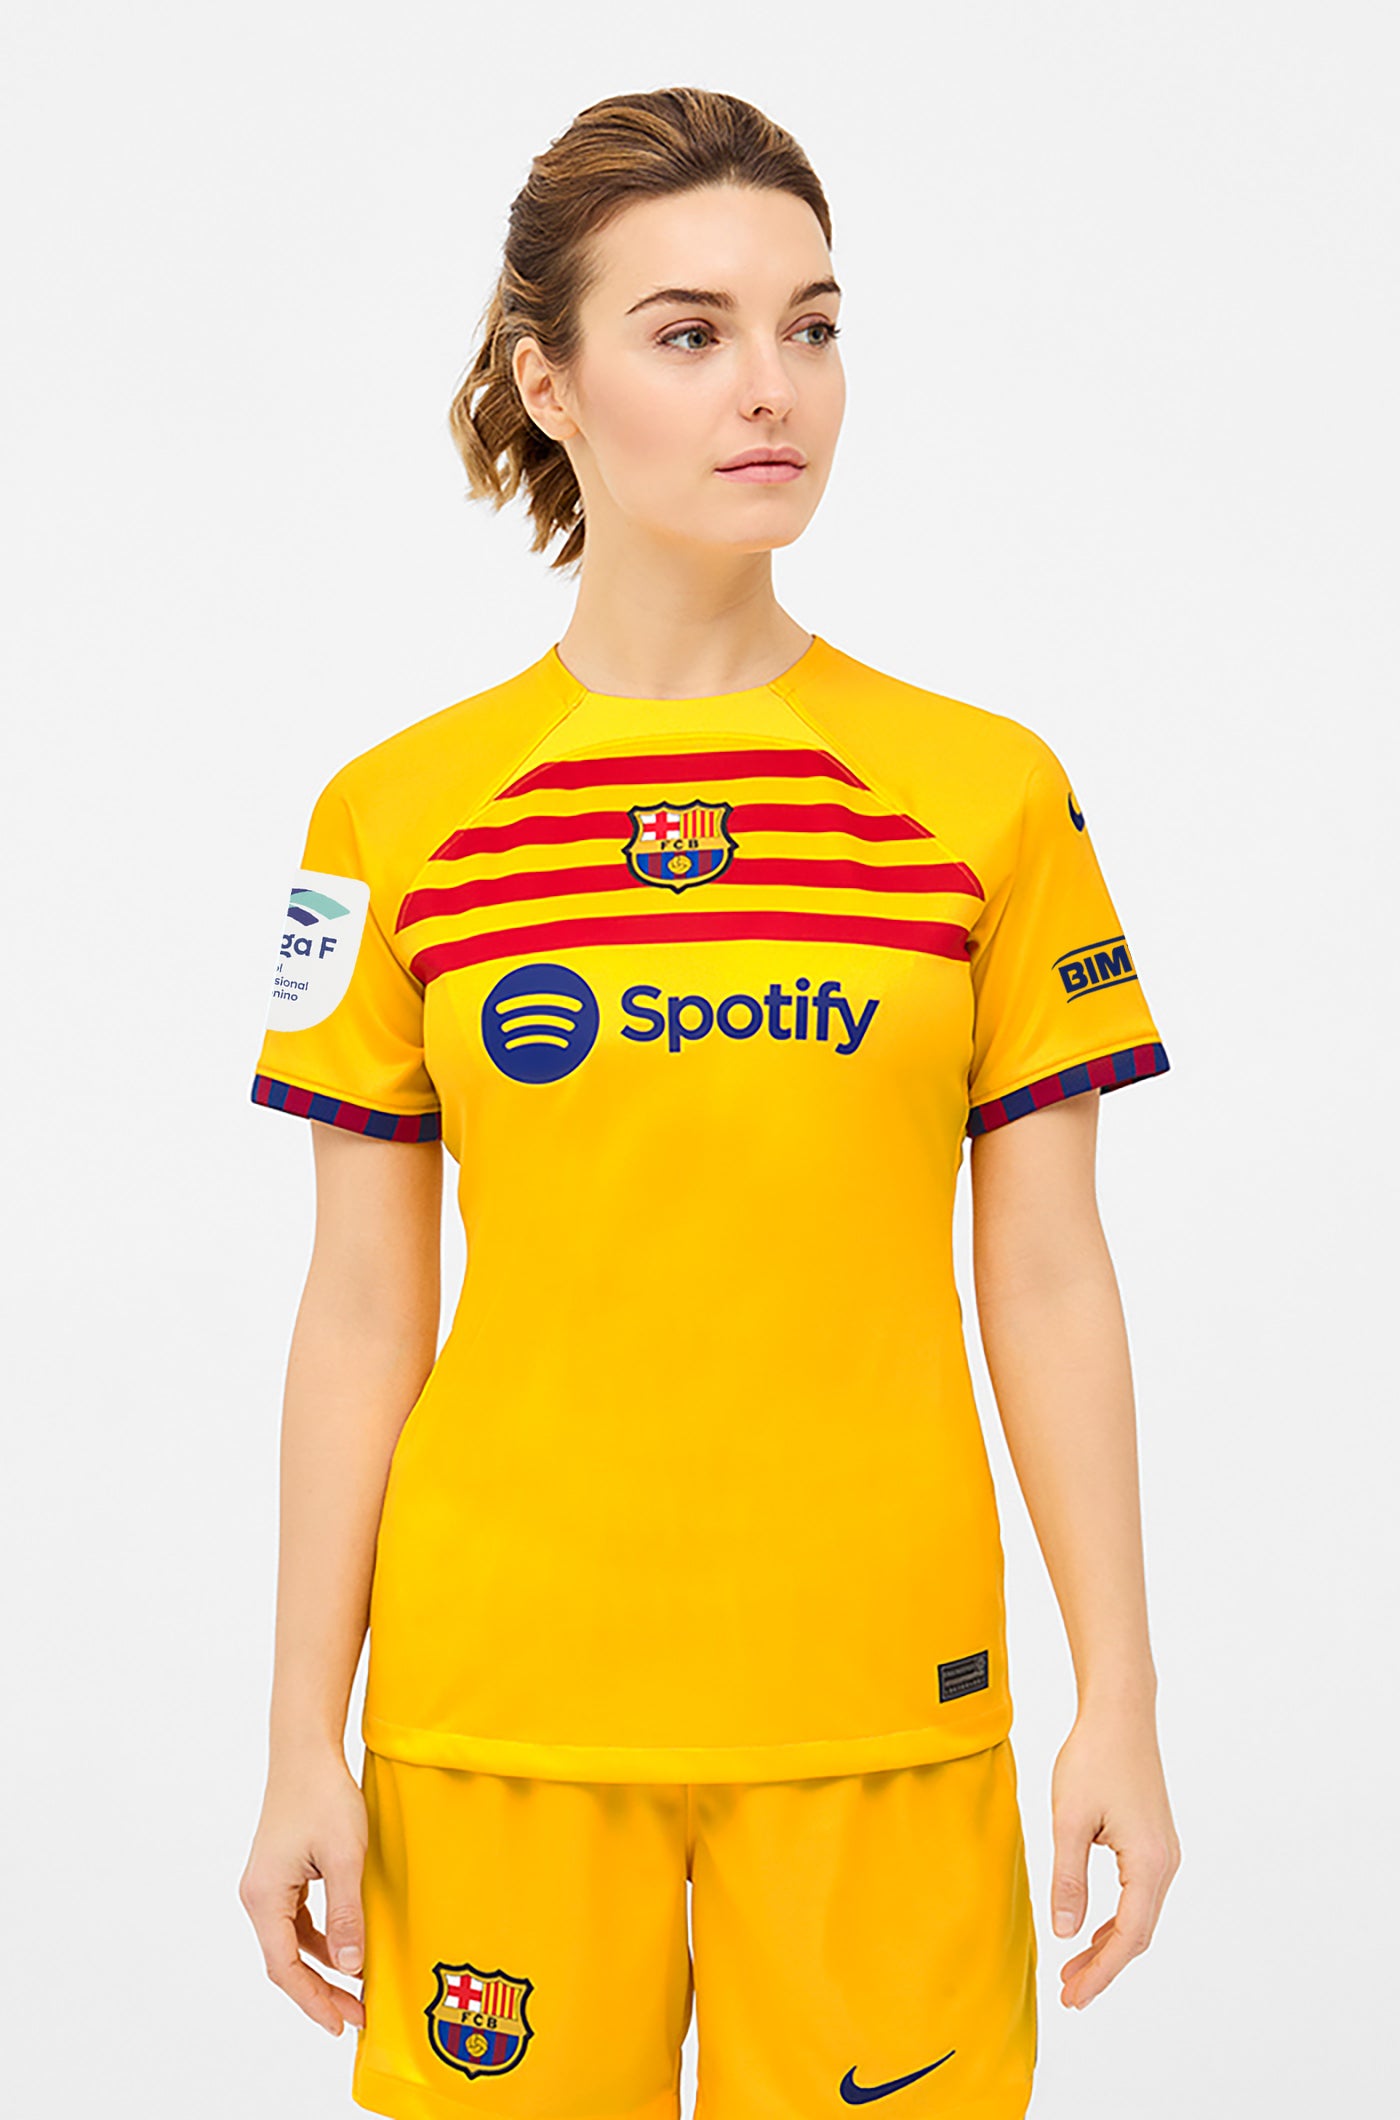 Liga F FC Barcelona fourth shirt 23/24 - Women  - ALEXIA